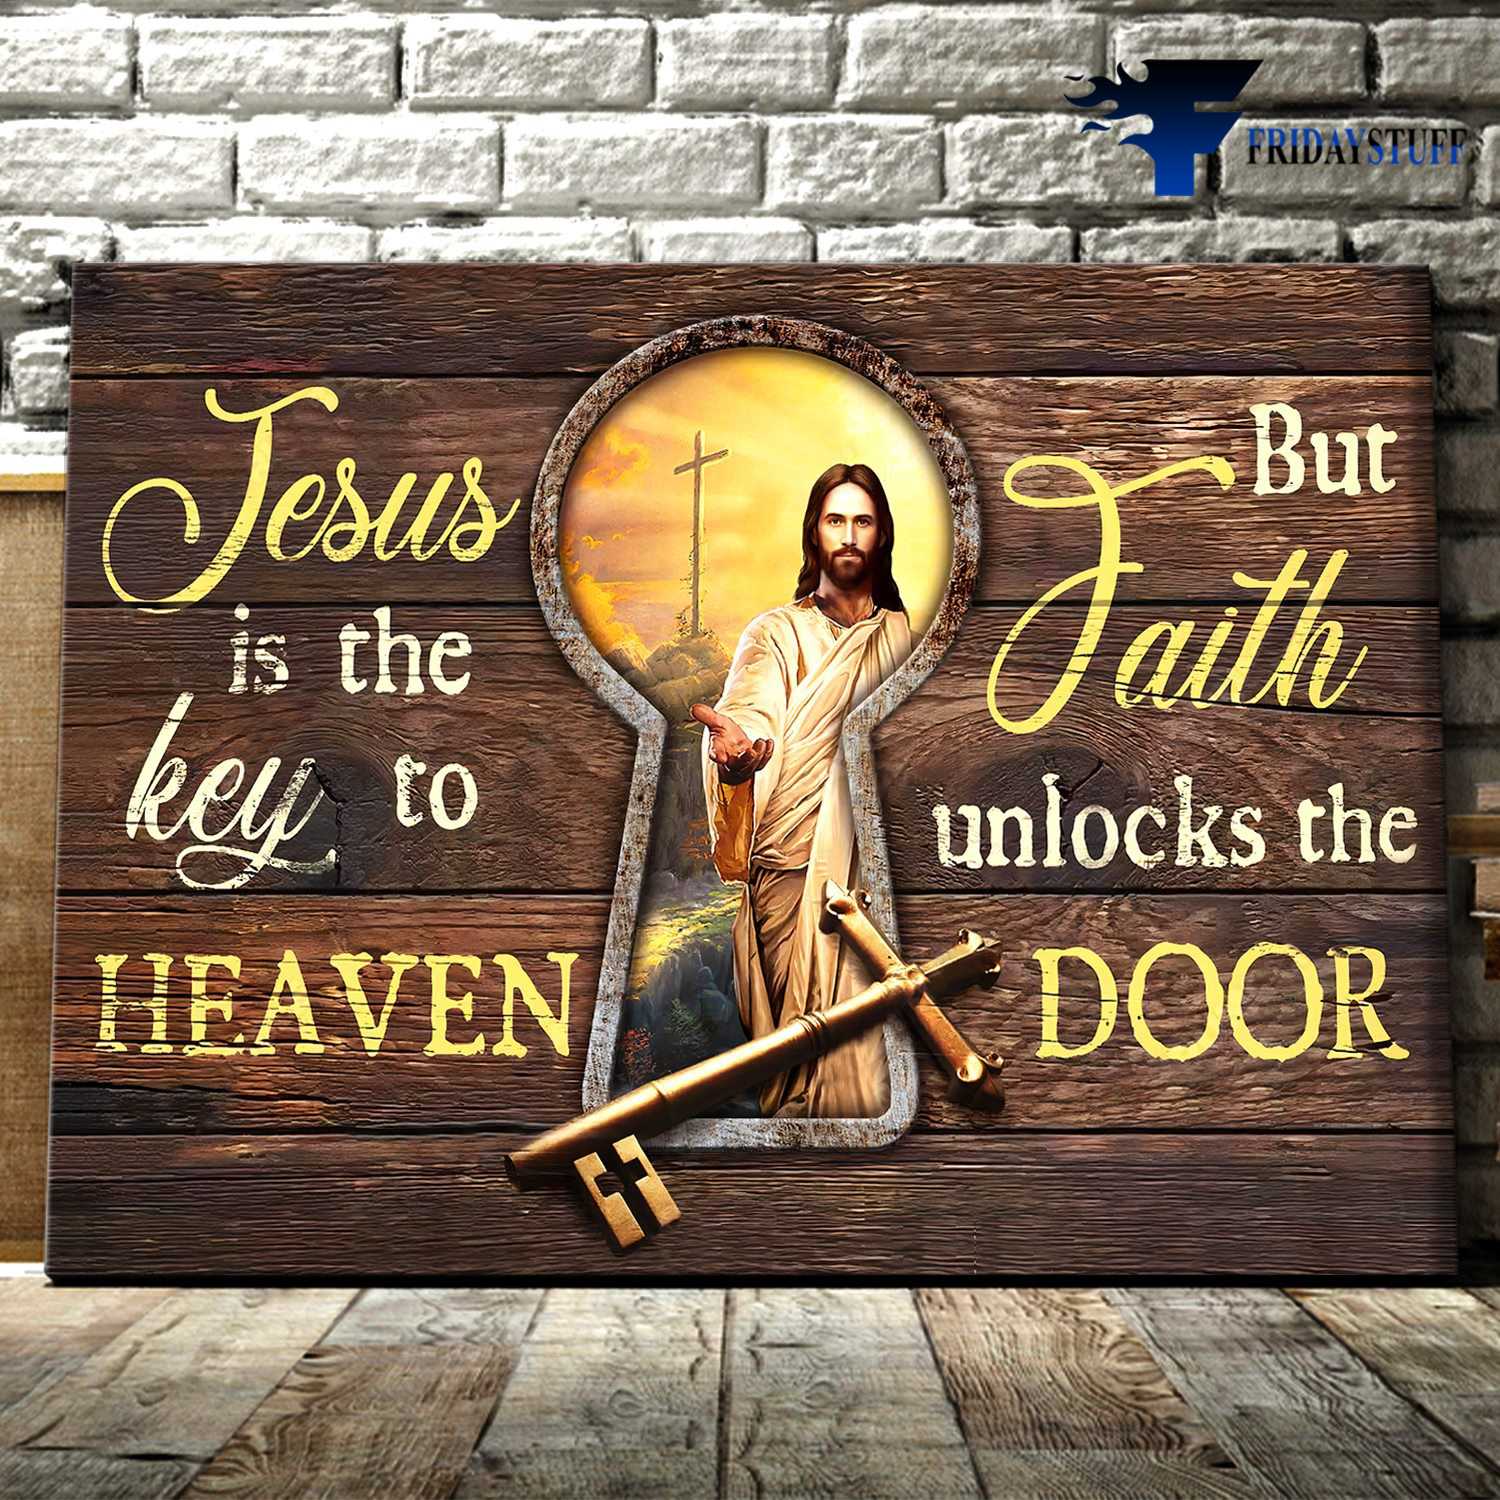 Jesus Poster, Jesis Is The Key To Heaven, But Faith To Unlock The Door